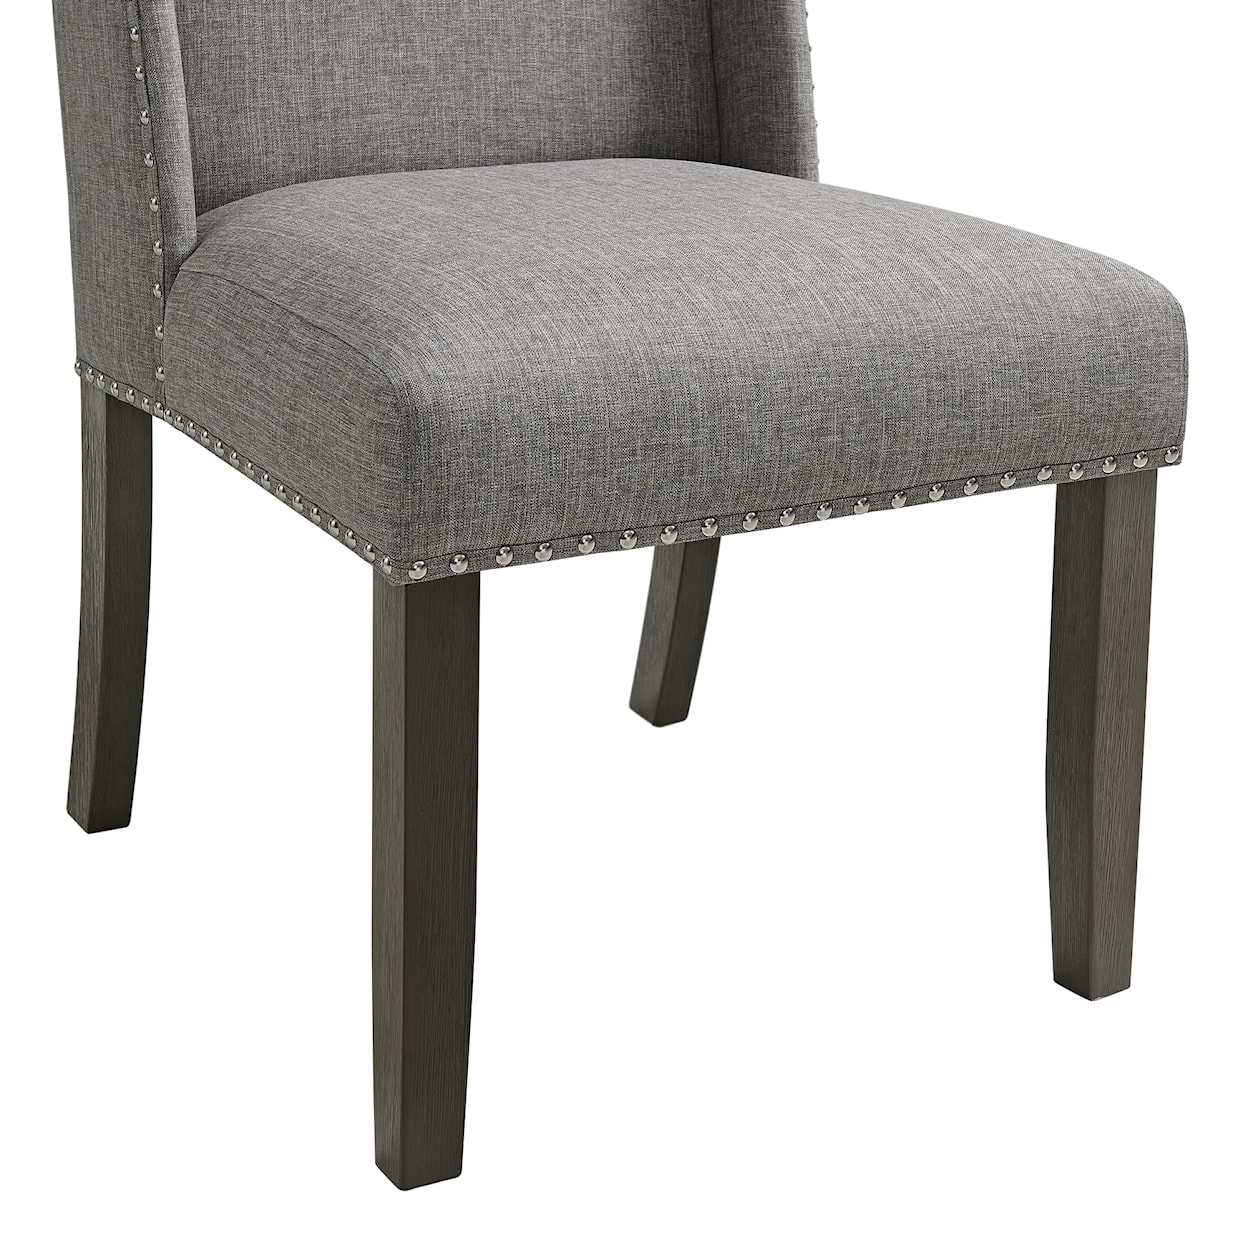 Elements International Everdeen Upholstered Dining Side Chair